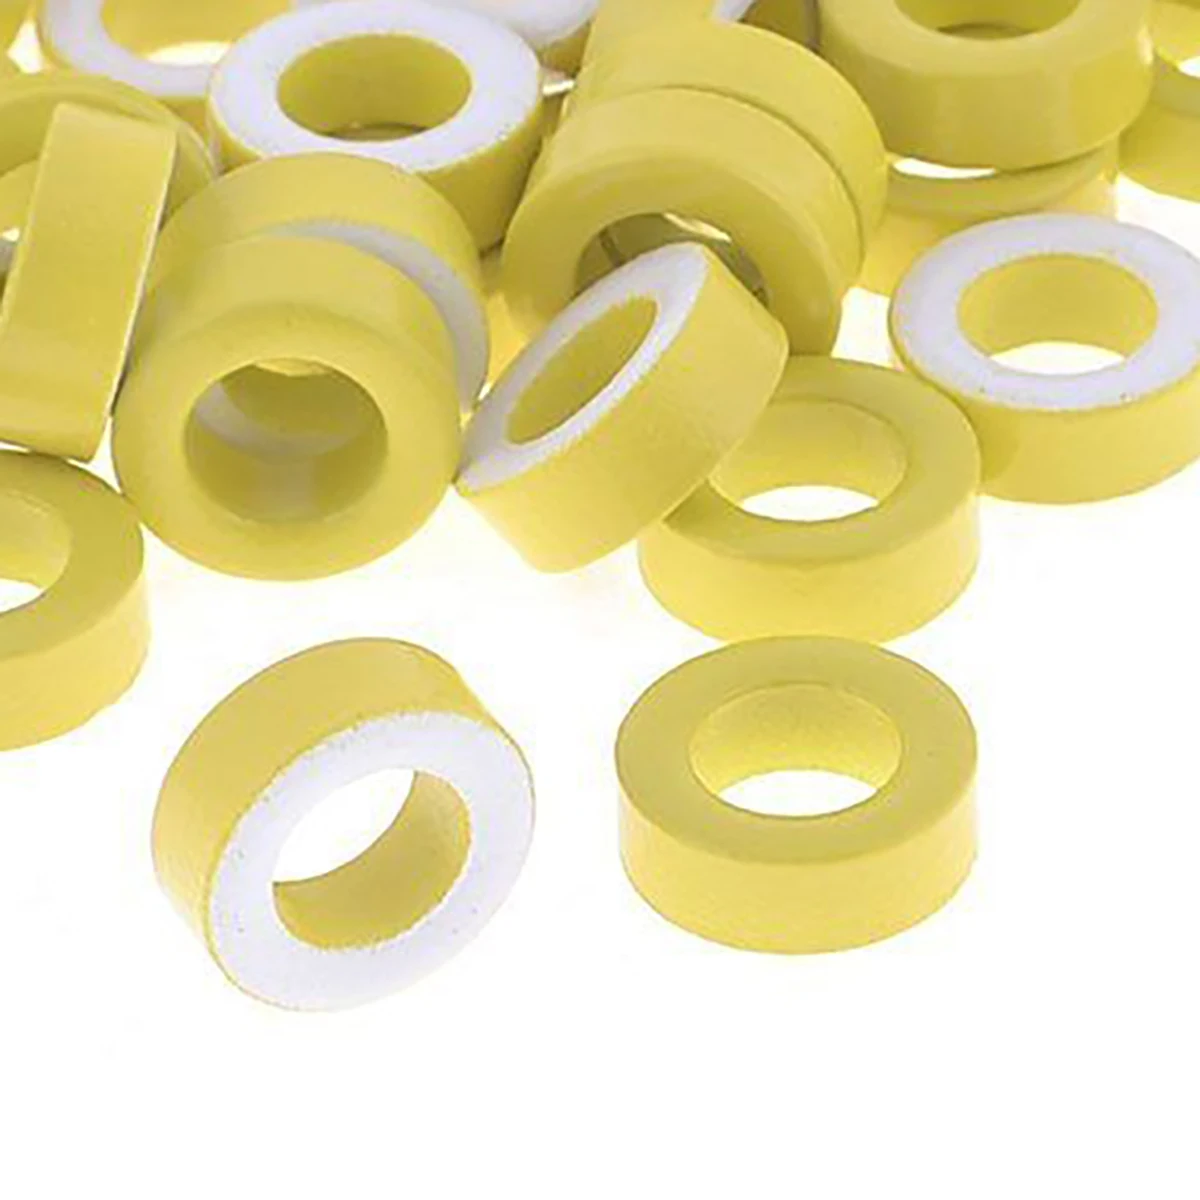 50pcs T50-26 Yellow White Ring Ferrite Cores Iron Ferrite Toroid Cores 7.5mm Inner Diameter For Inductors Power Transformers